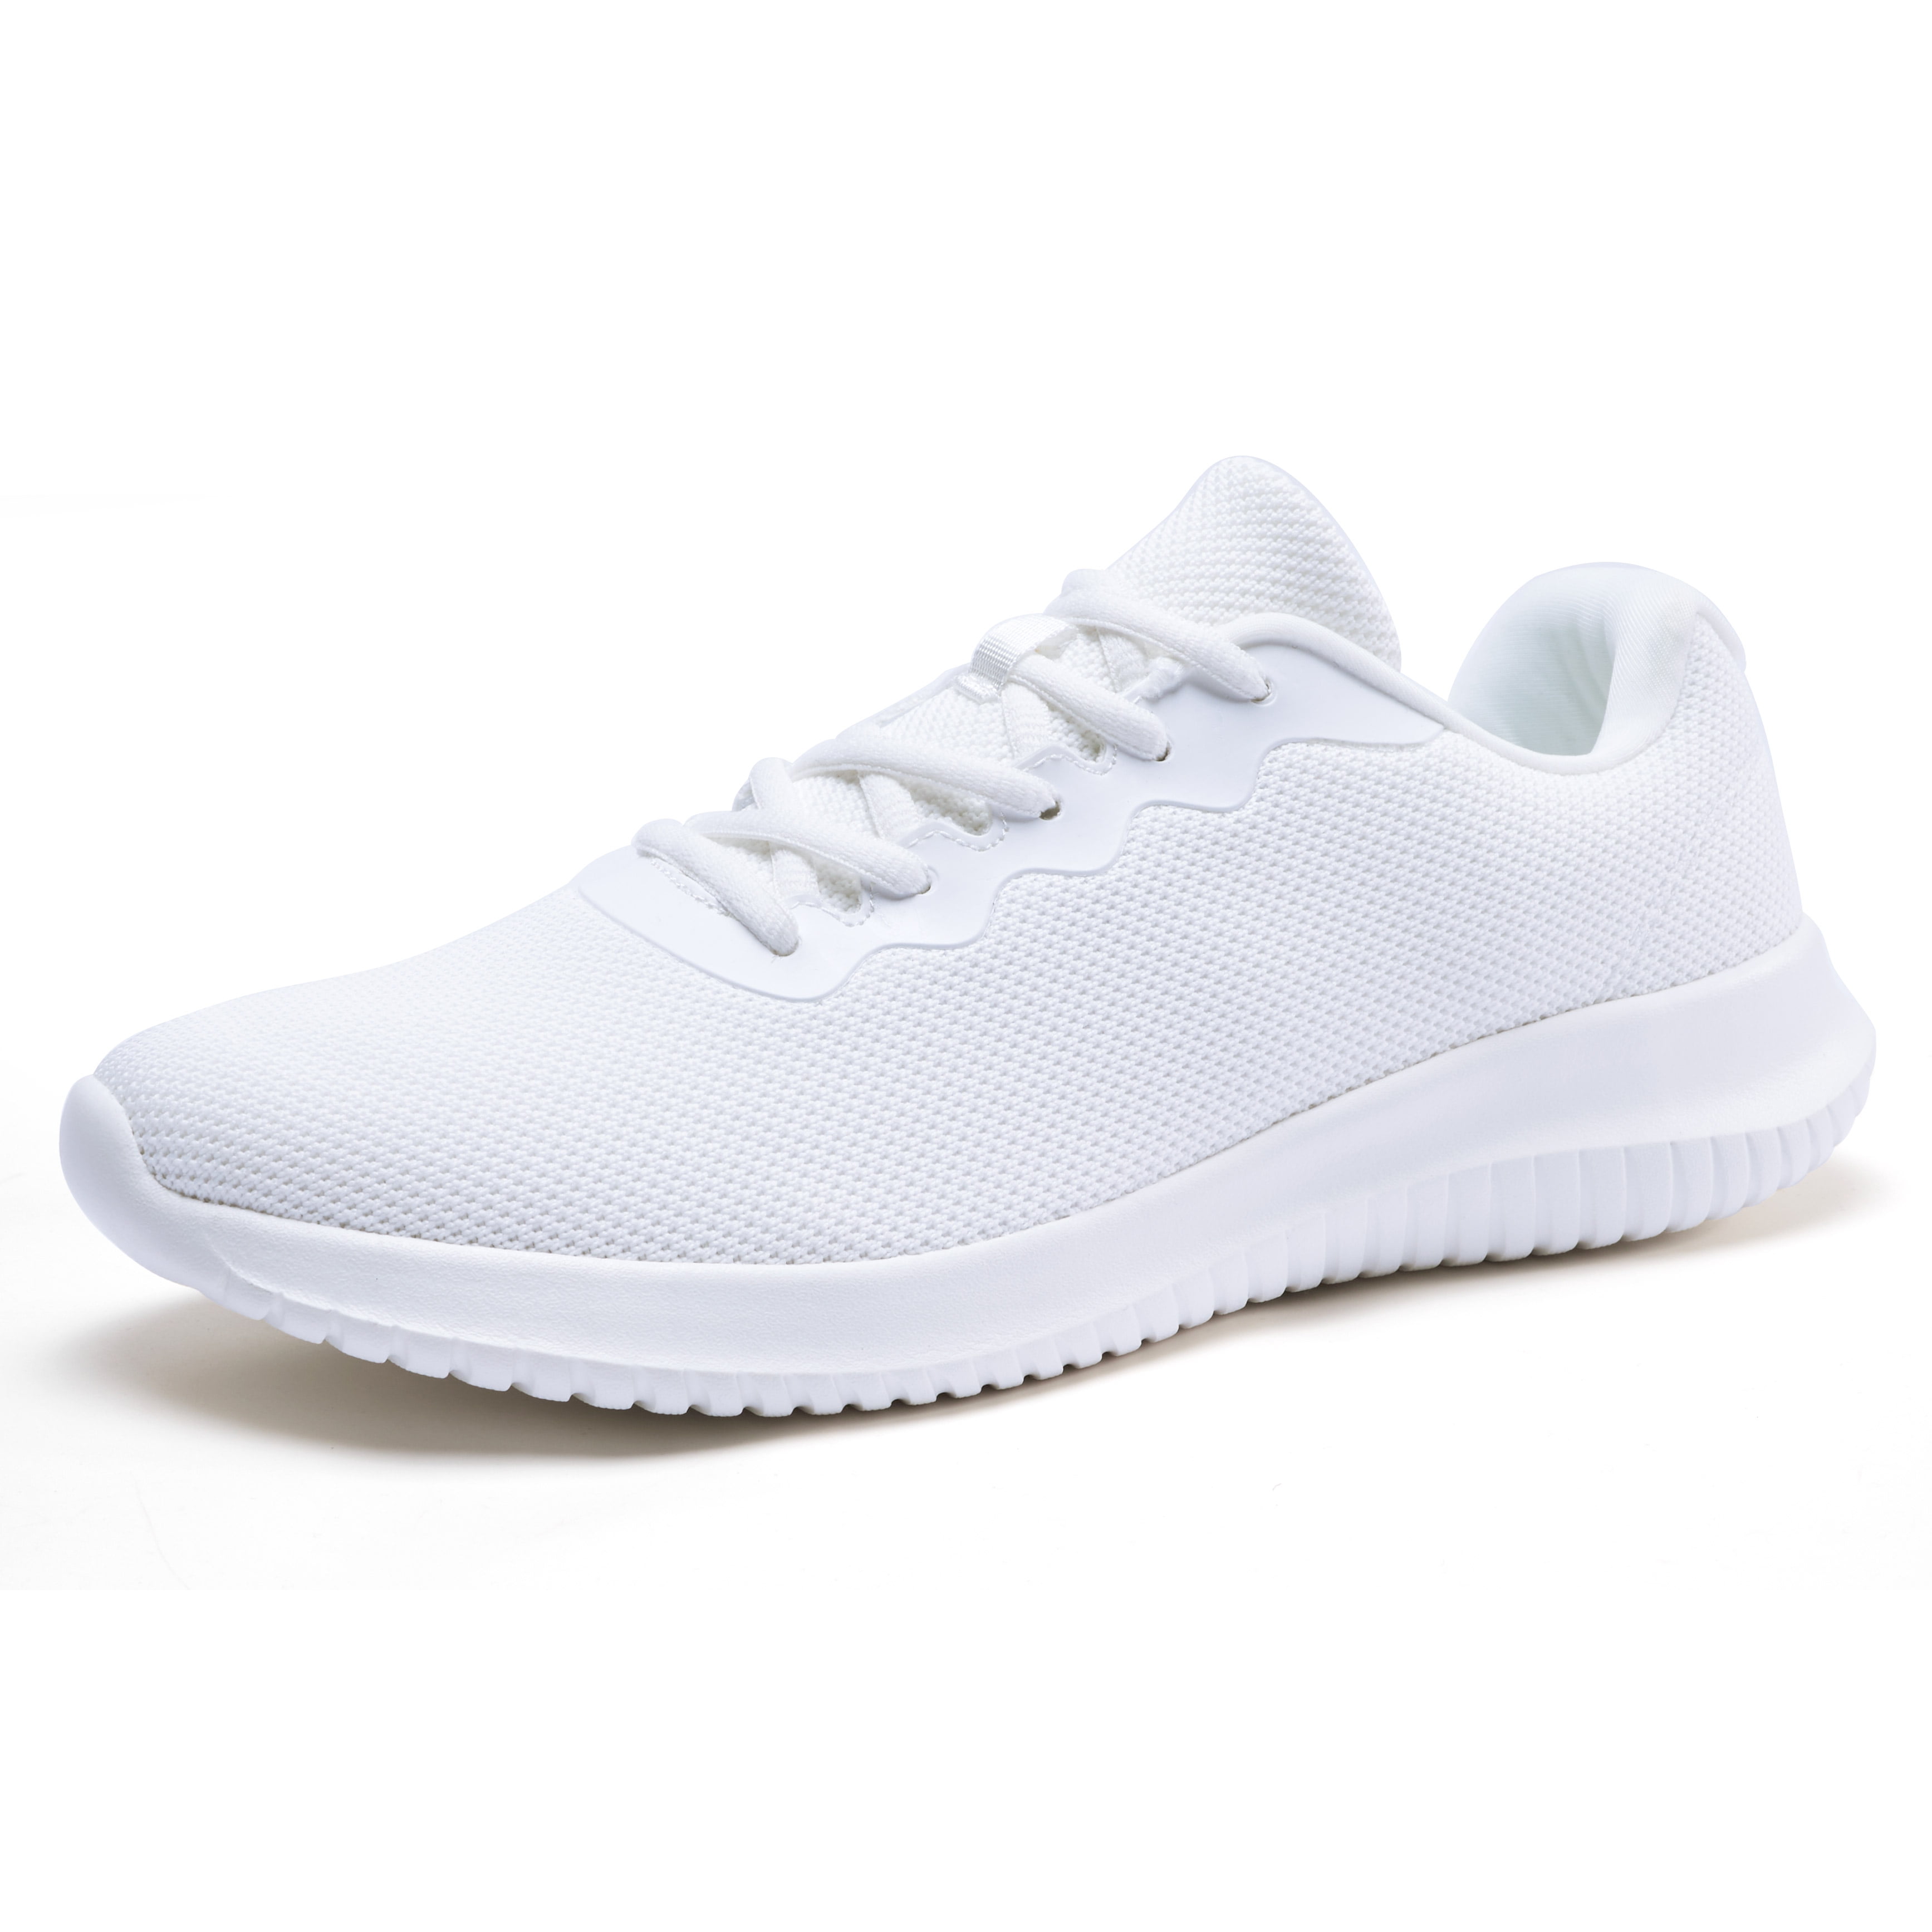 Akk Men's Walking Running Sneakers Athletic Tennis Shoes White Size 11 ...